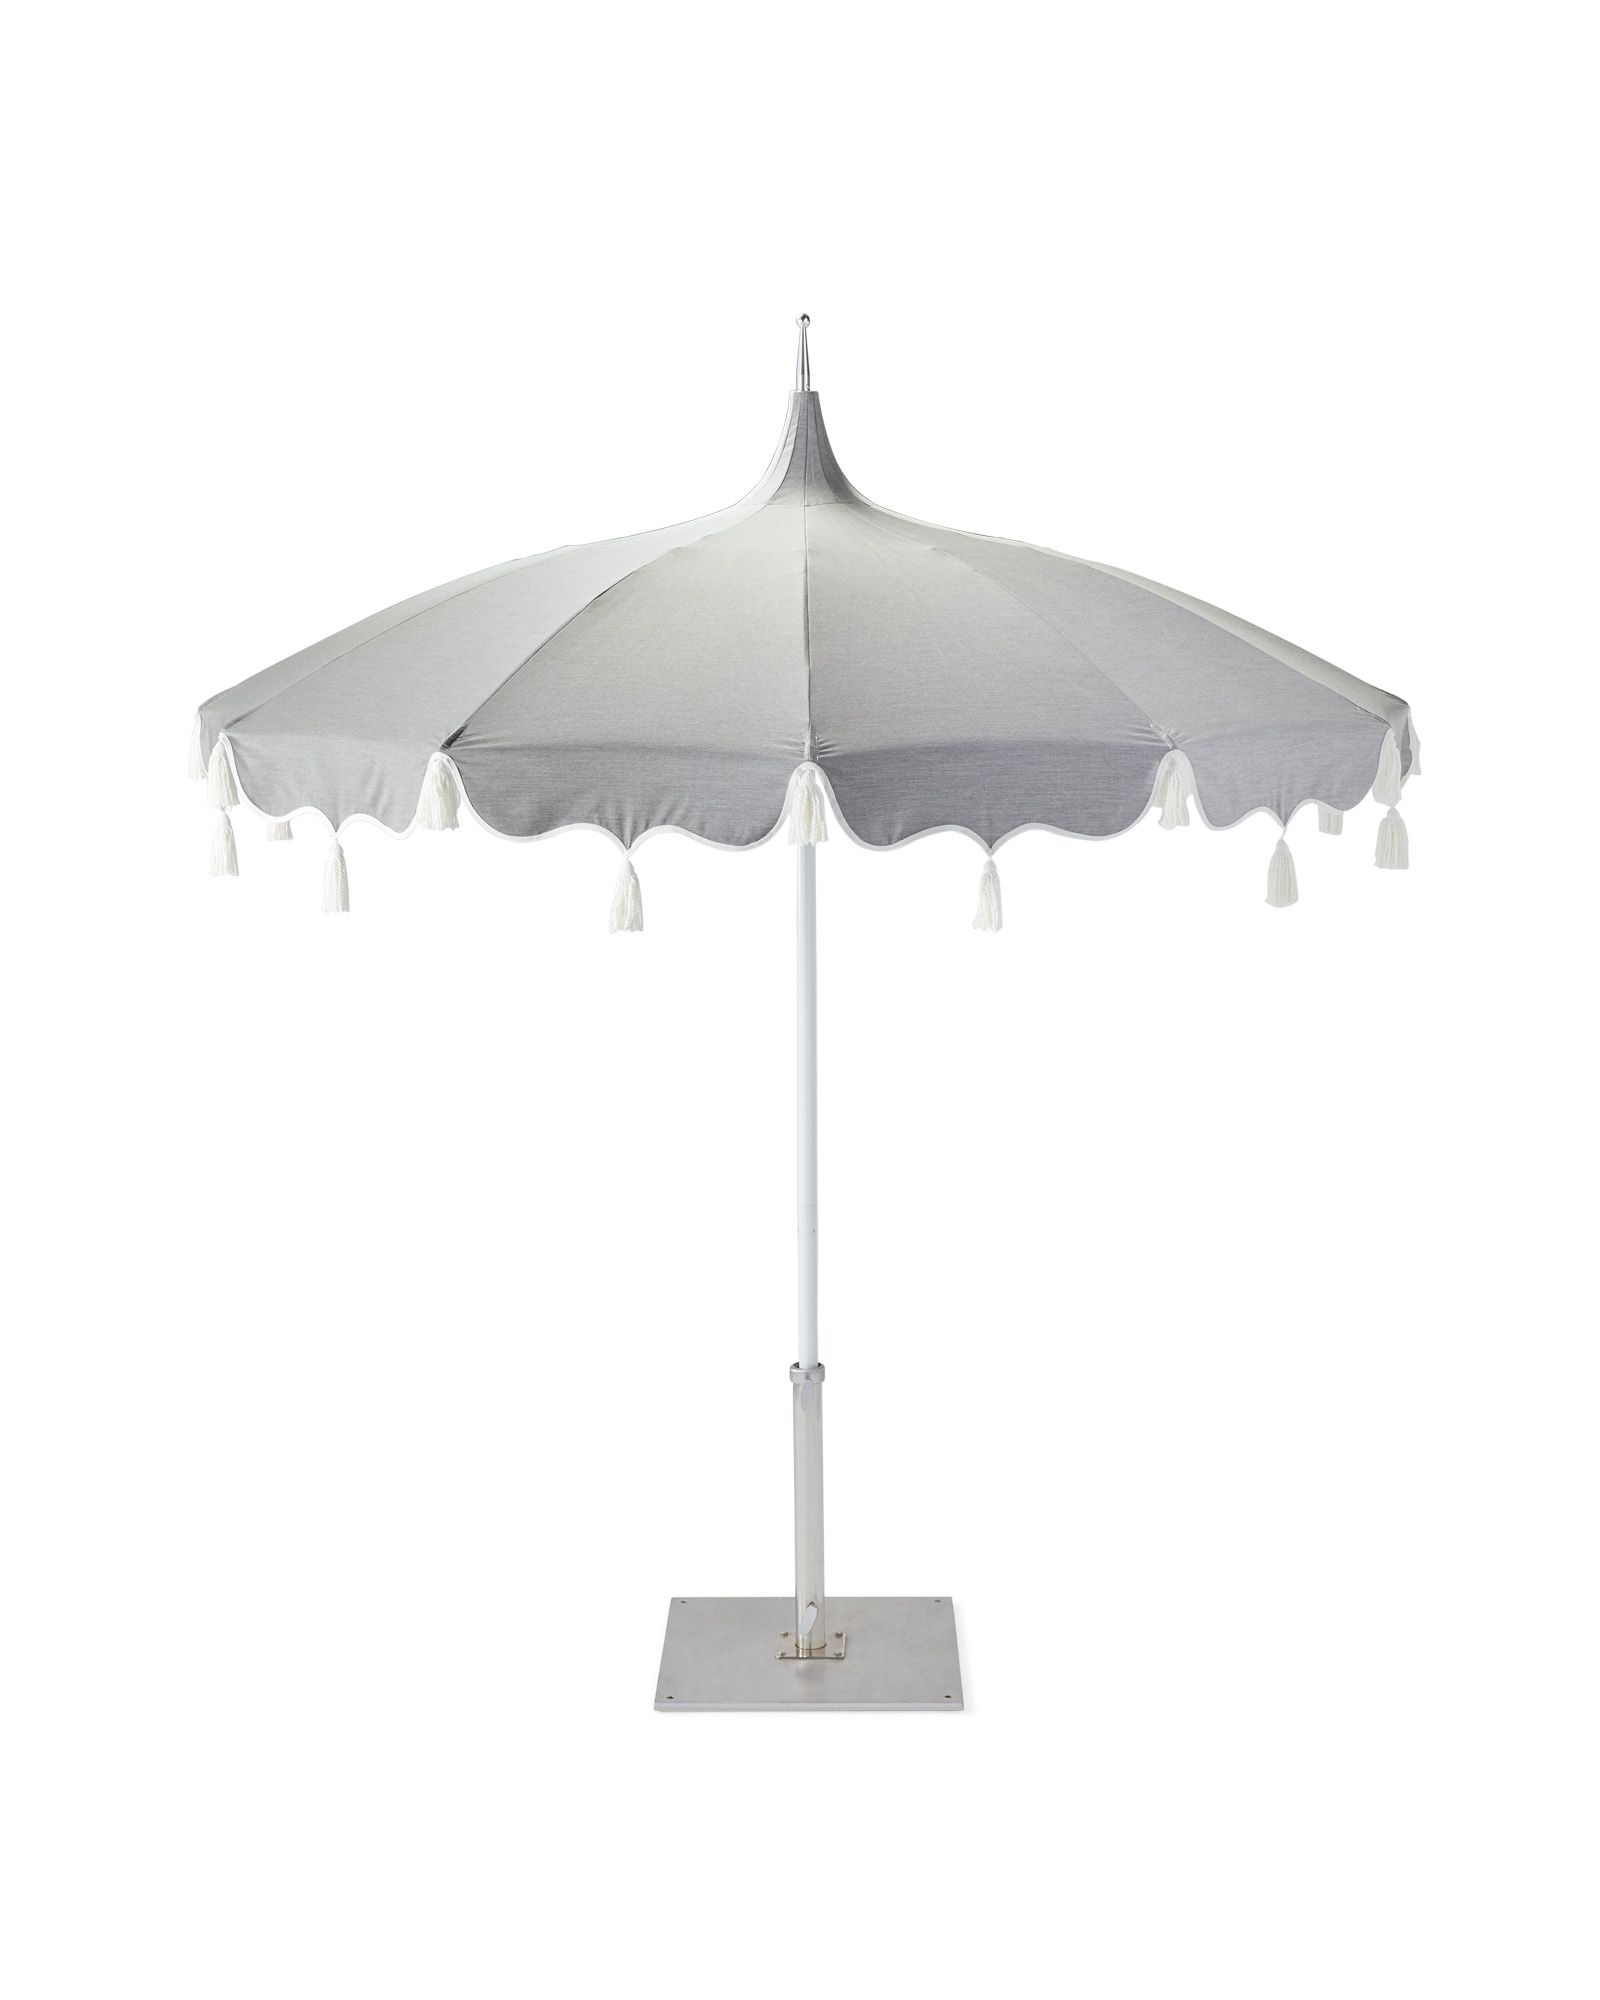 Amazon.com : Artpuch Offset Umbrella 10ft Cantilever Patio Umbrella Outdoor  Hanging Market Umbrella with Crank & Cross Base, 8 Sturdy Ribs (Beige) :  Patio, Lawn & Garden